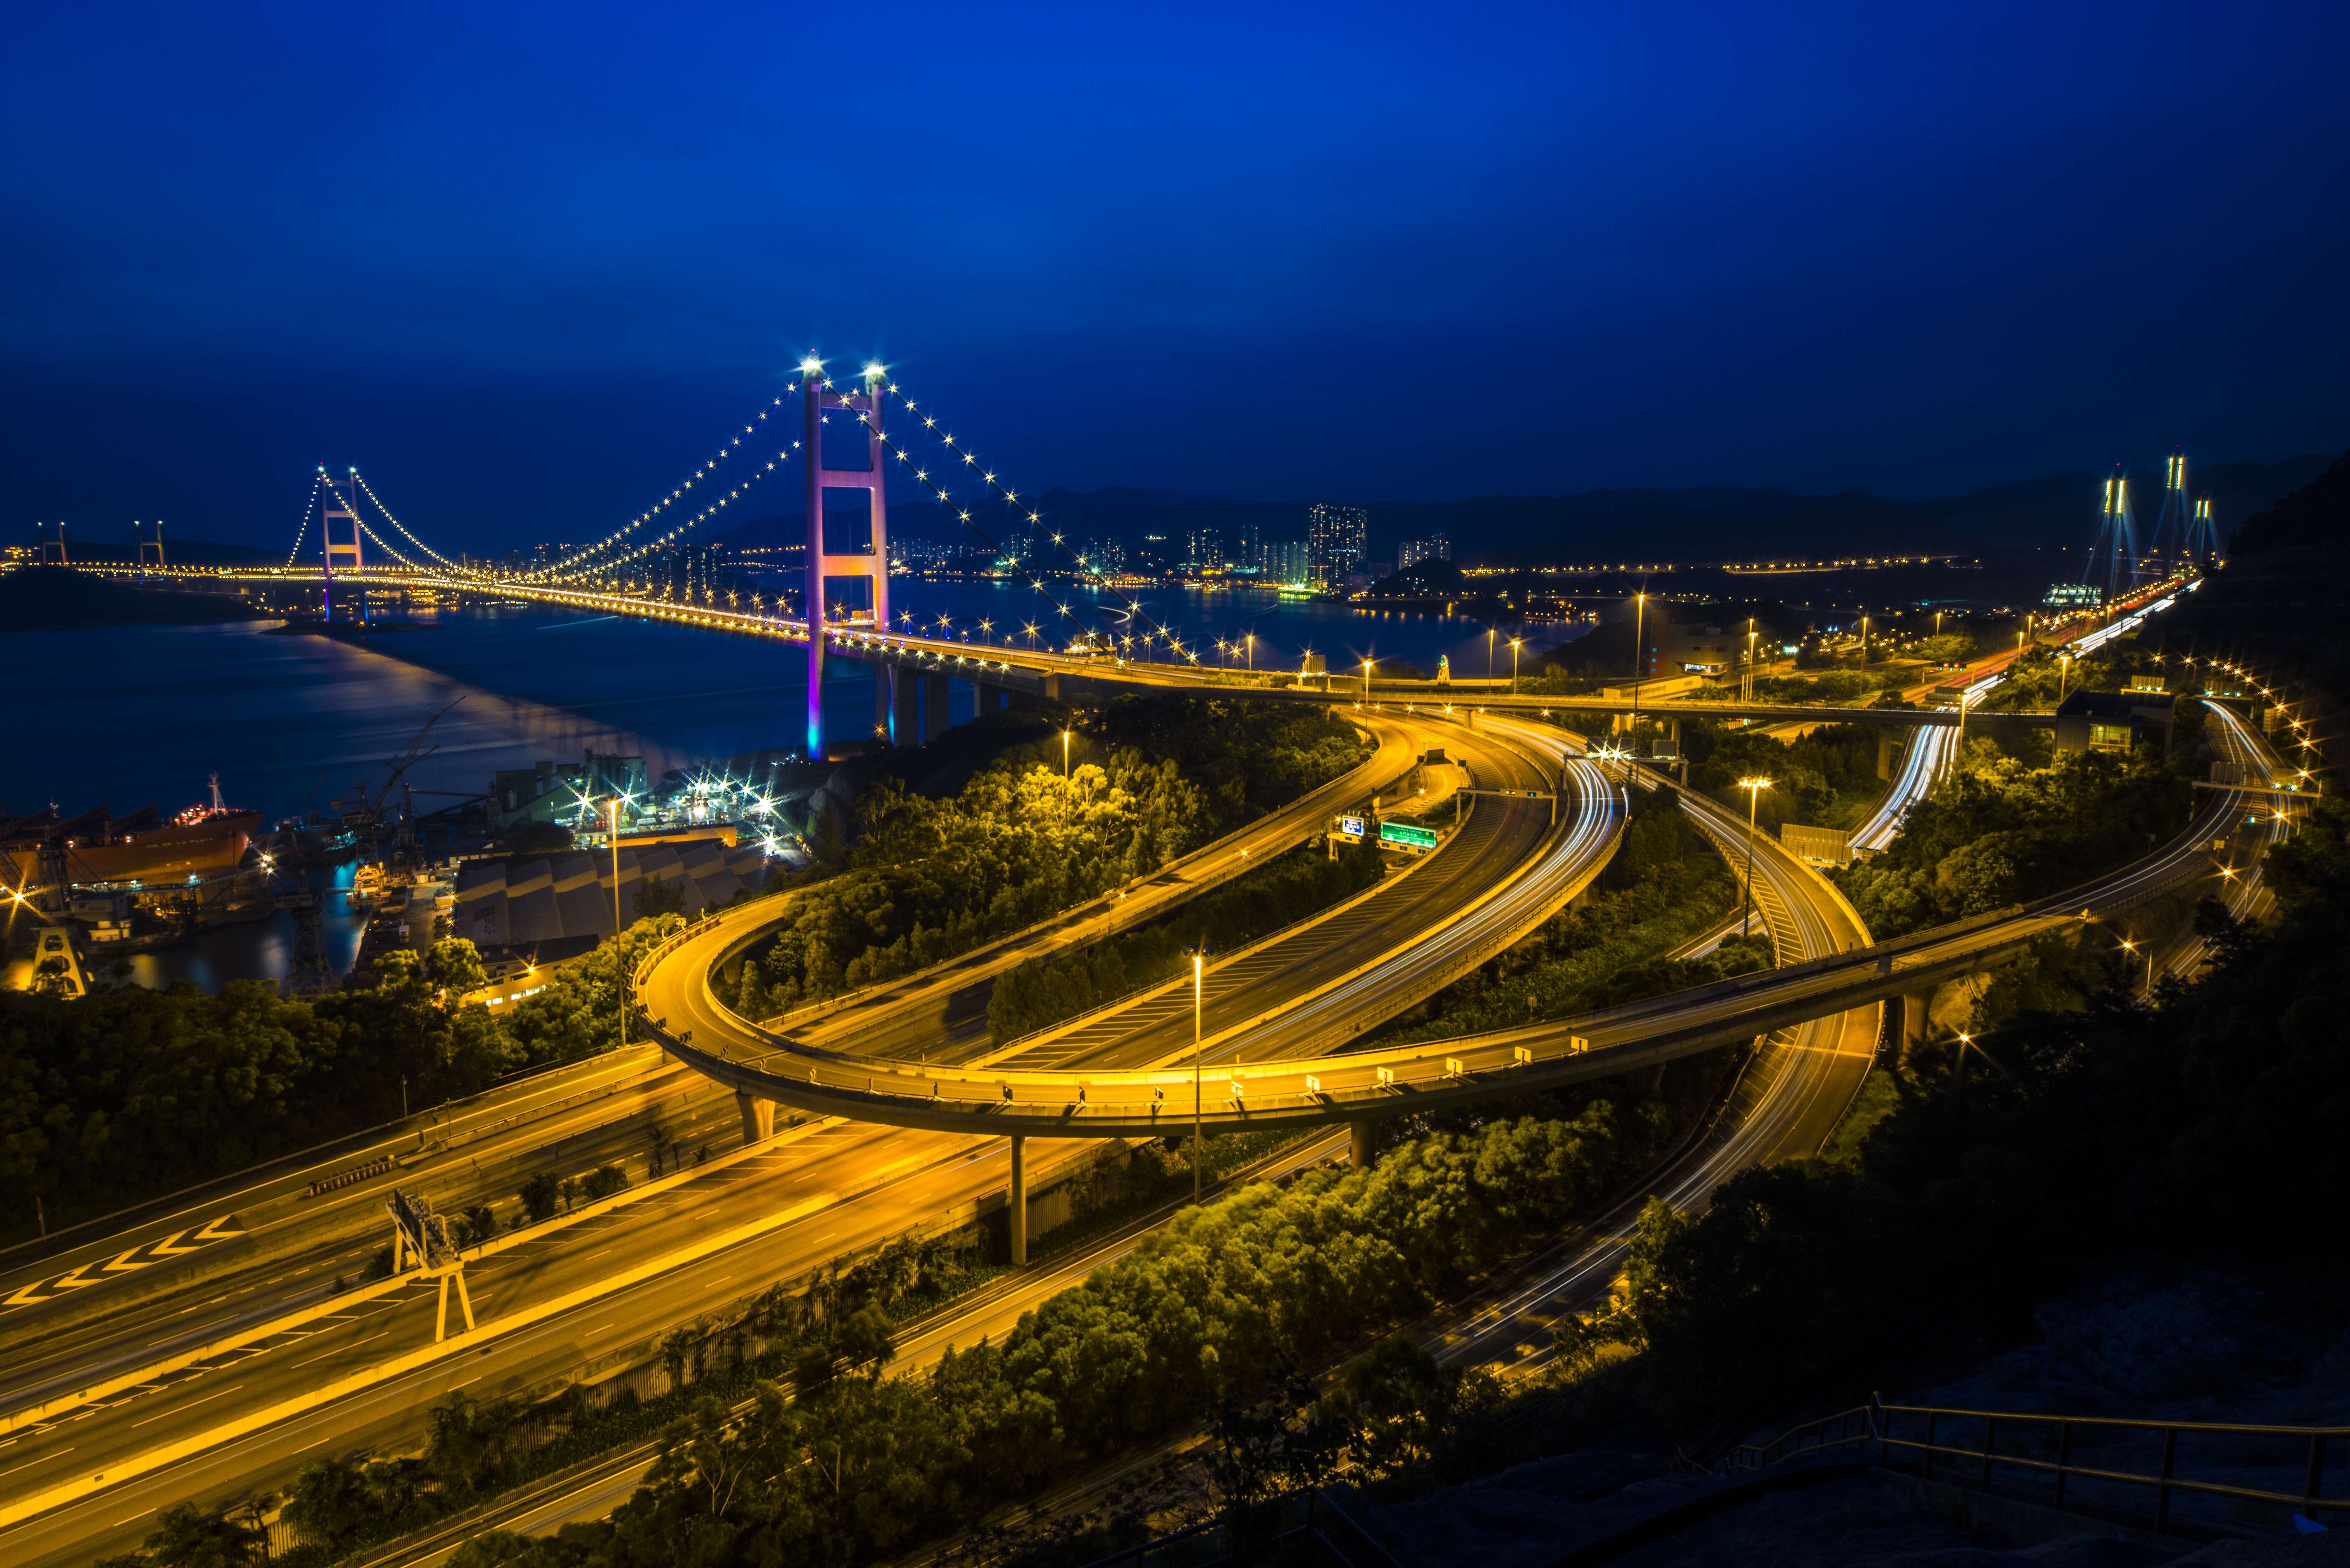 General 6721x4485 cityscape bridge long exposure road intersections night sky interchange China Asia